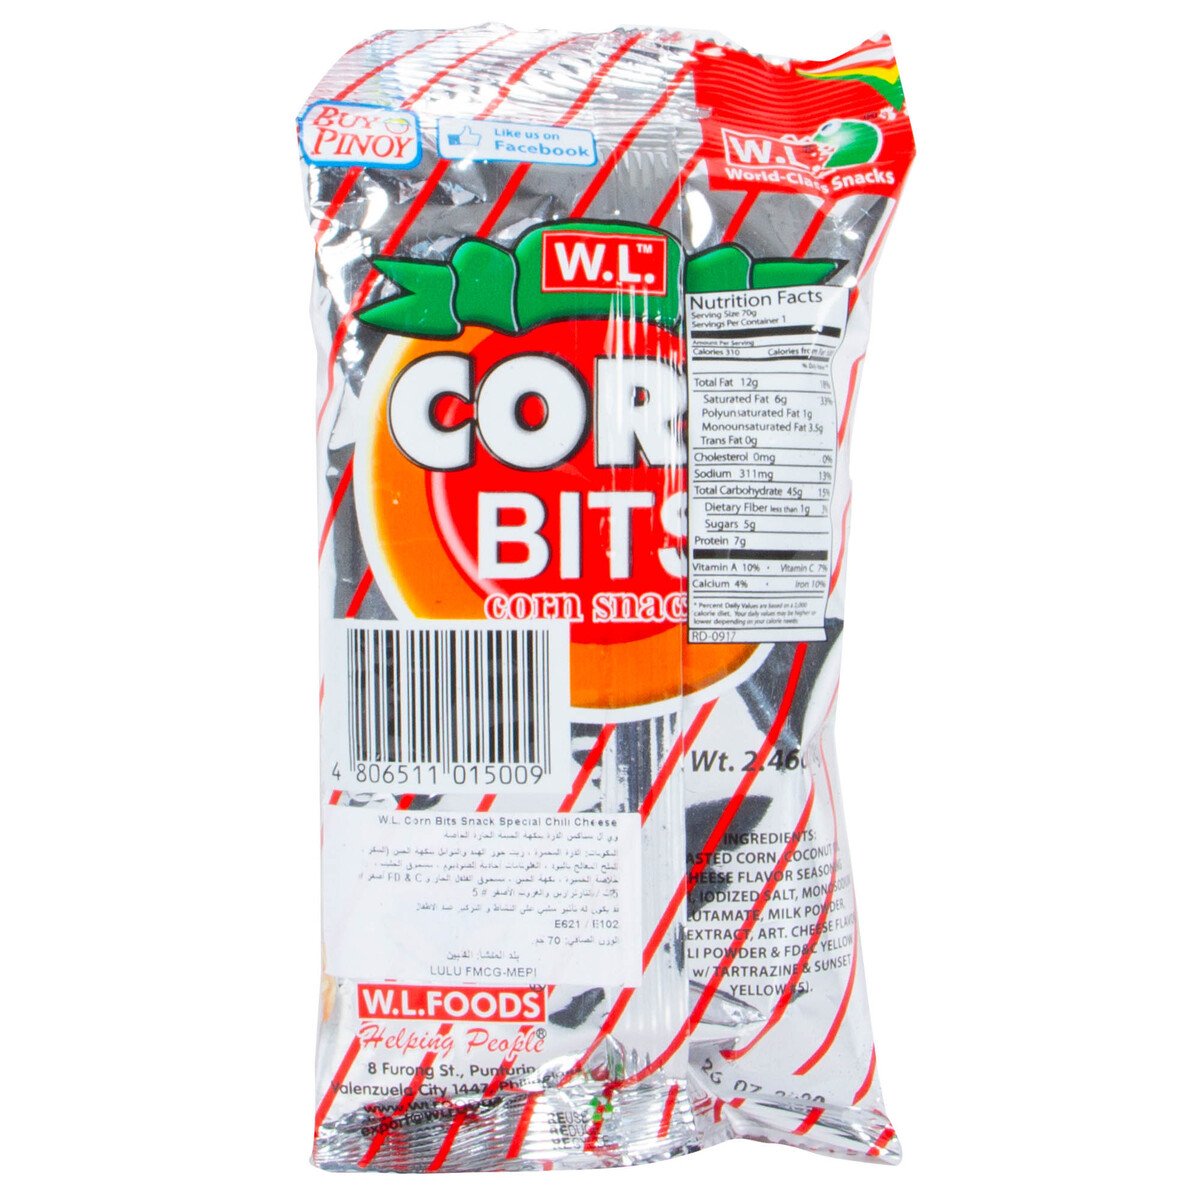 WL Corn Bits Snack Special Chili Cheese 70 g